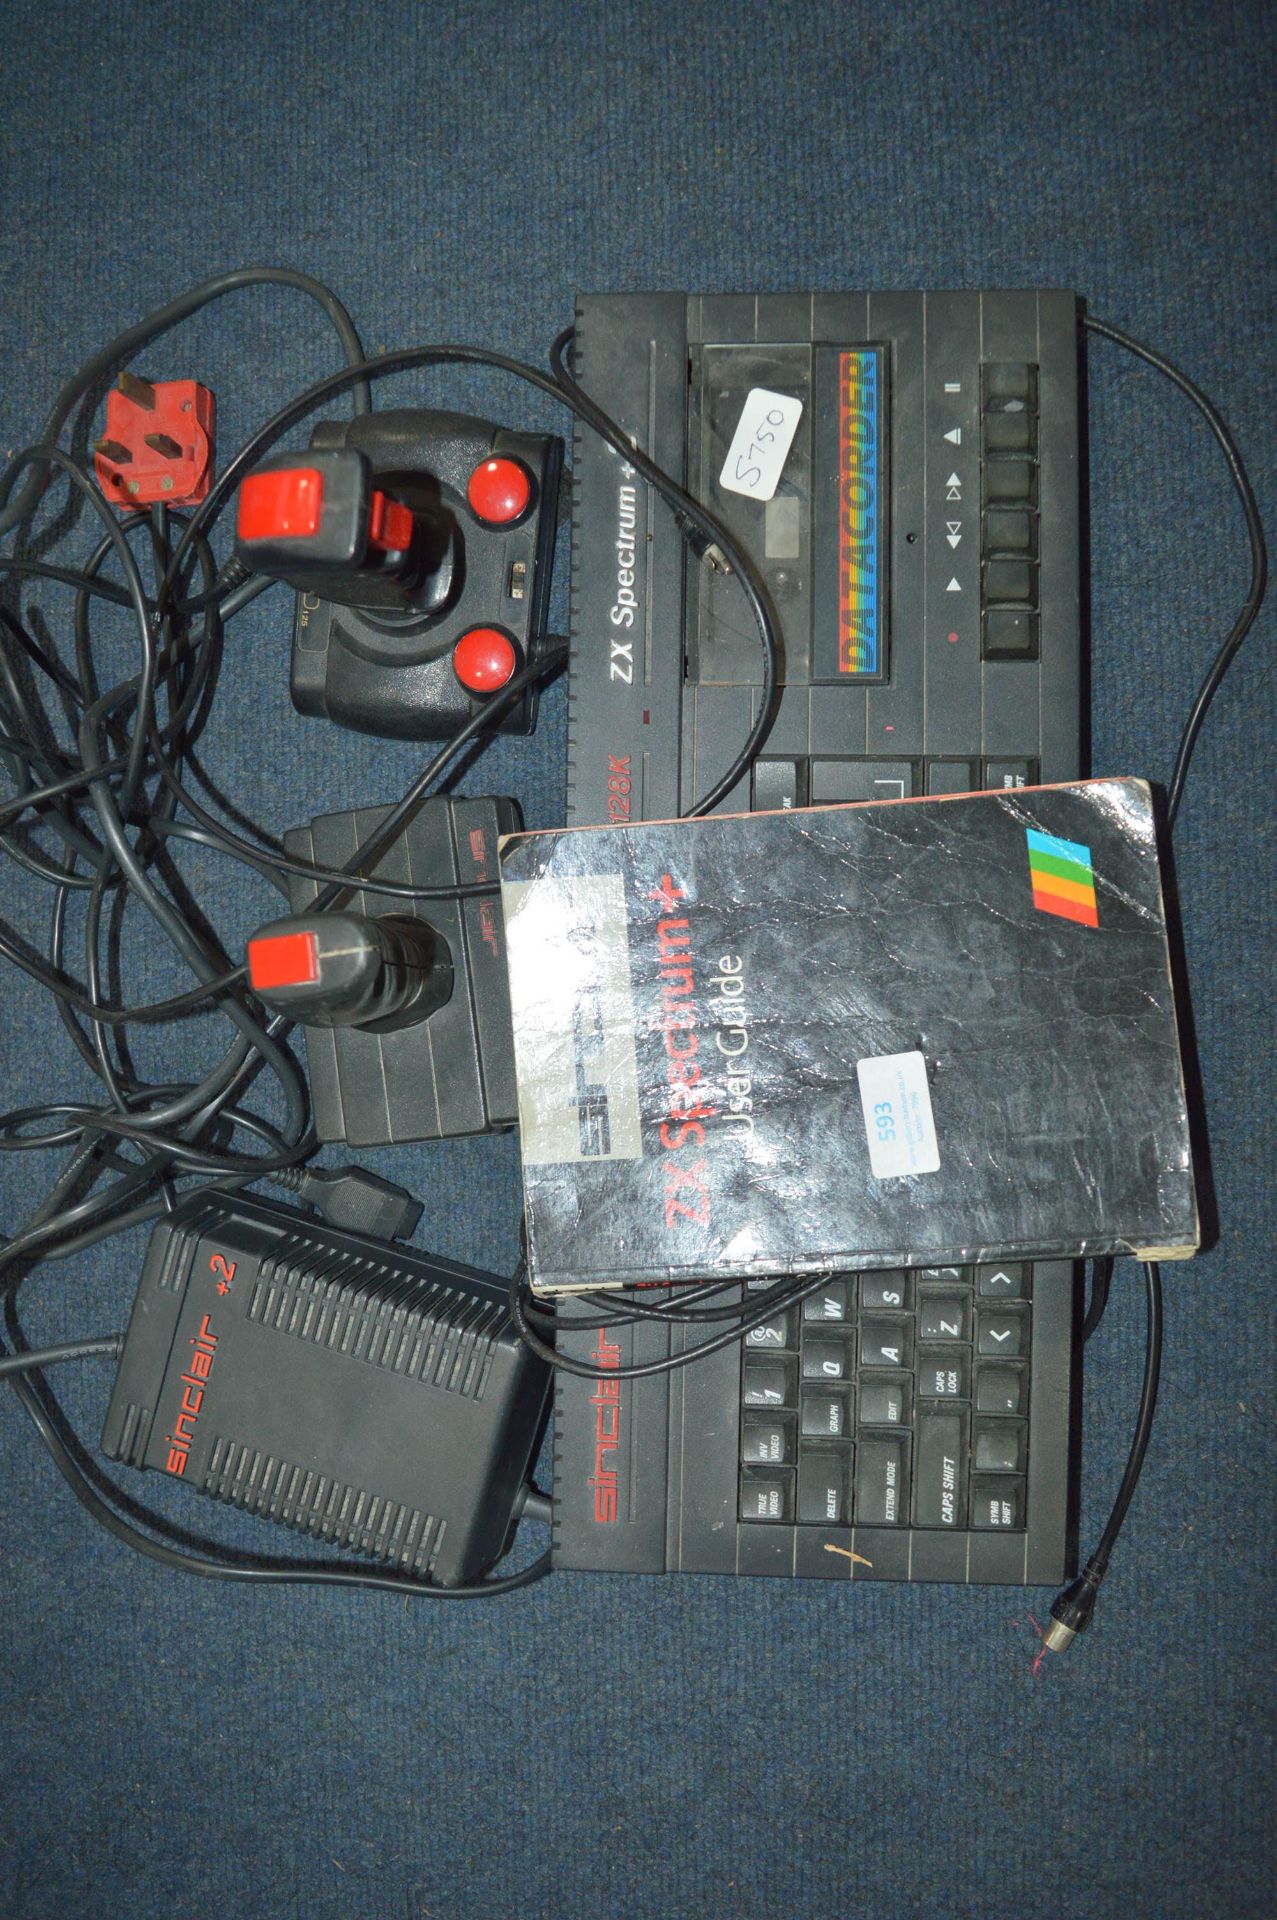 Sinclair 128K ZX Spectrum +2 with Joysticks and Bo